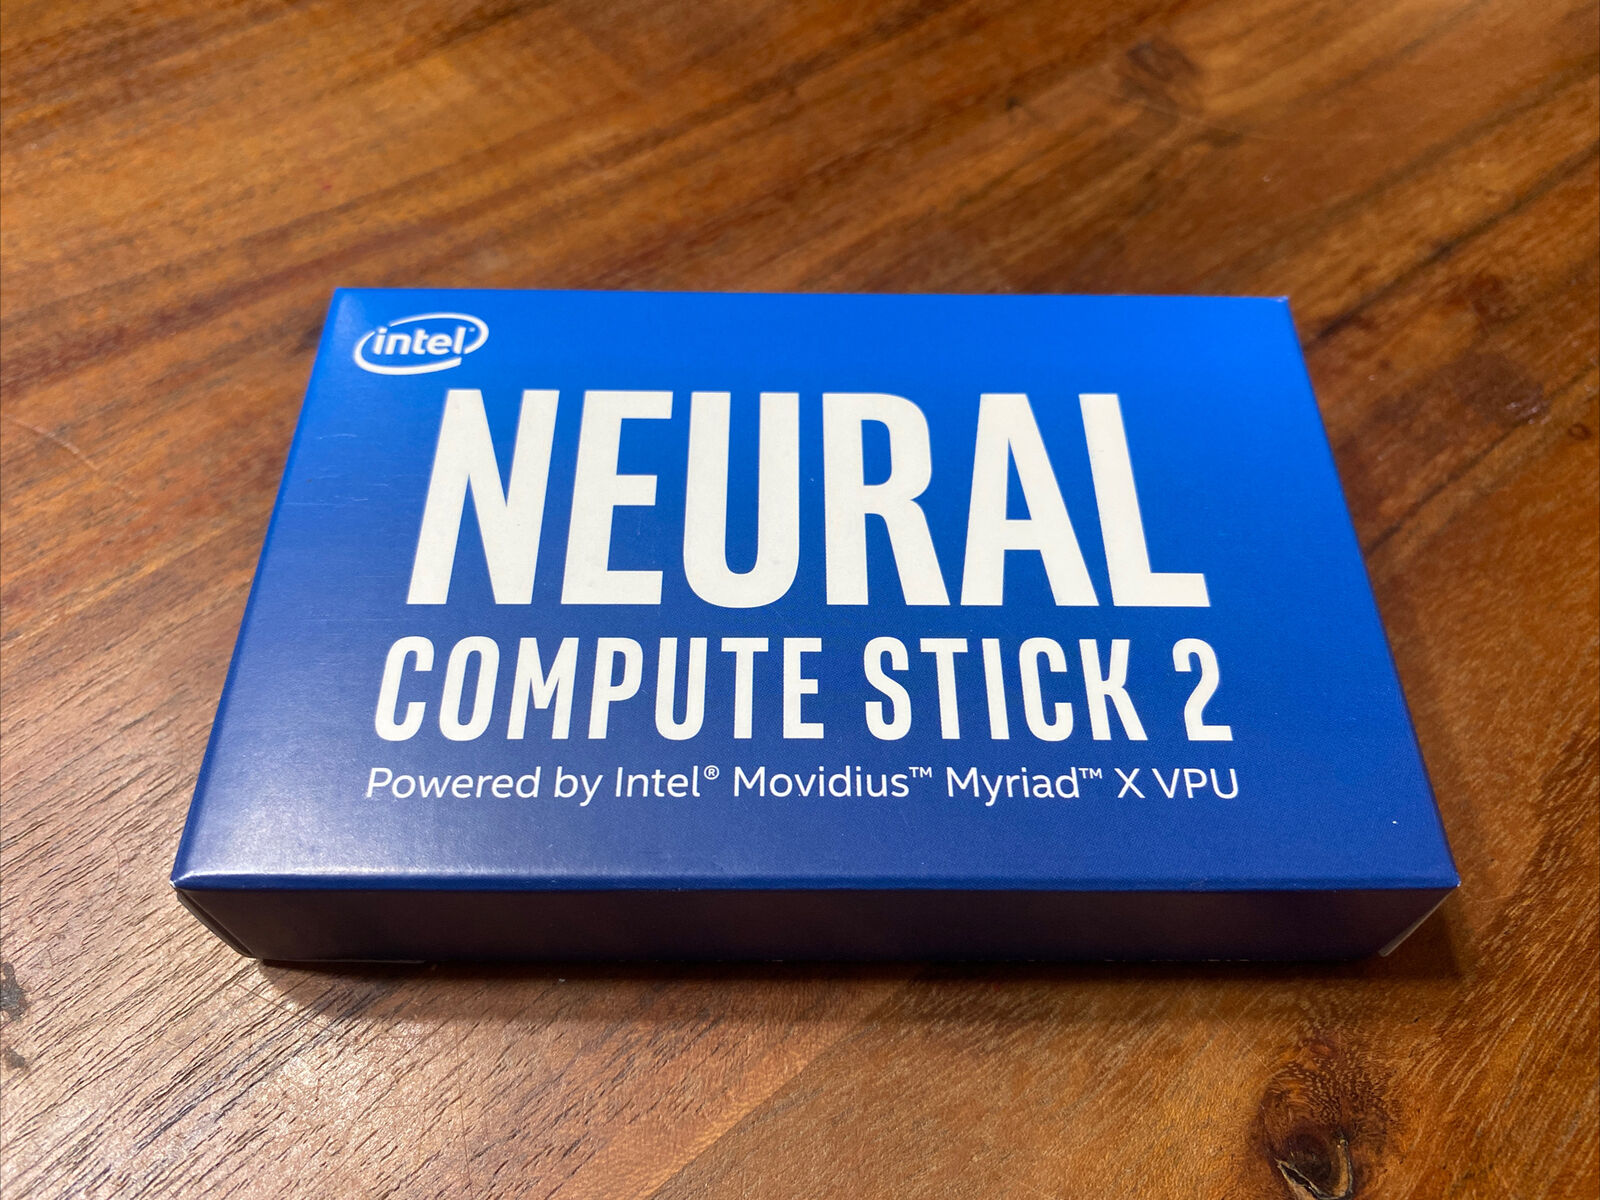 Intel Neural Compute Stick 2 NCS USB Learning Windows 10 Development Prototyping